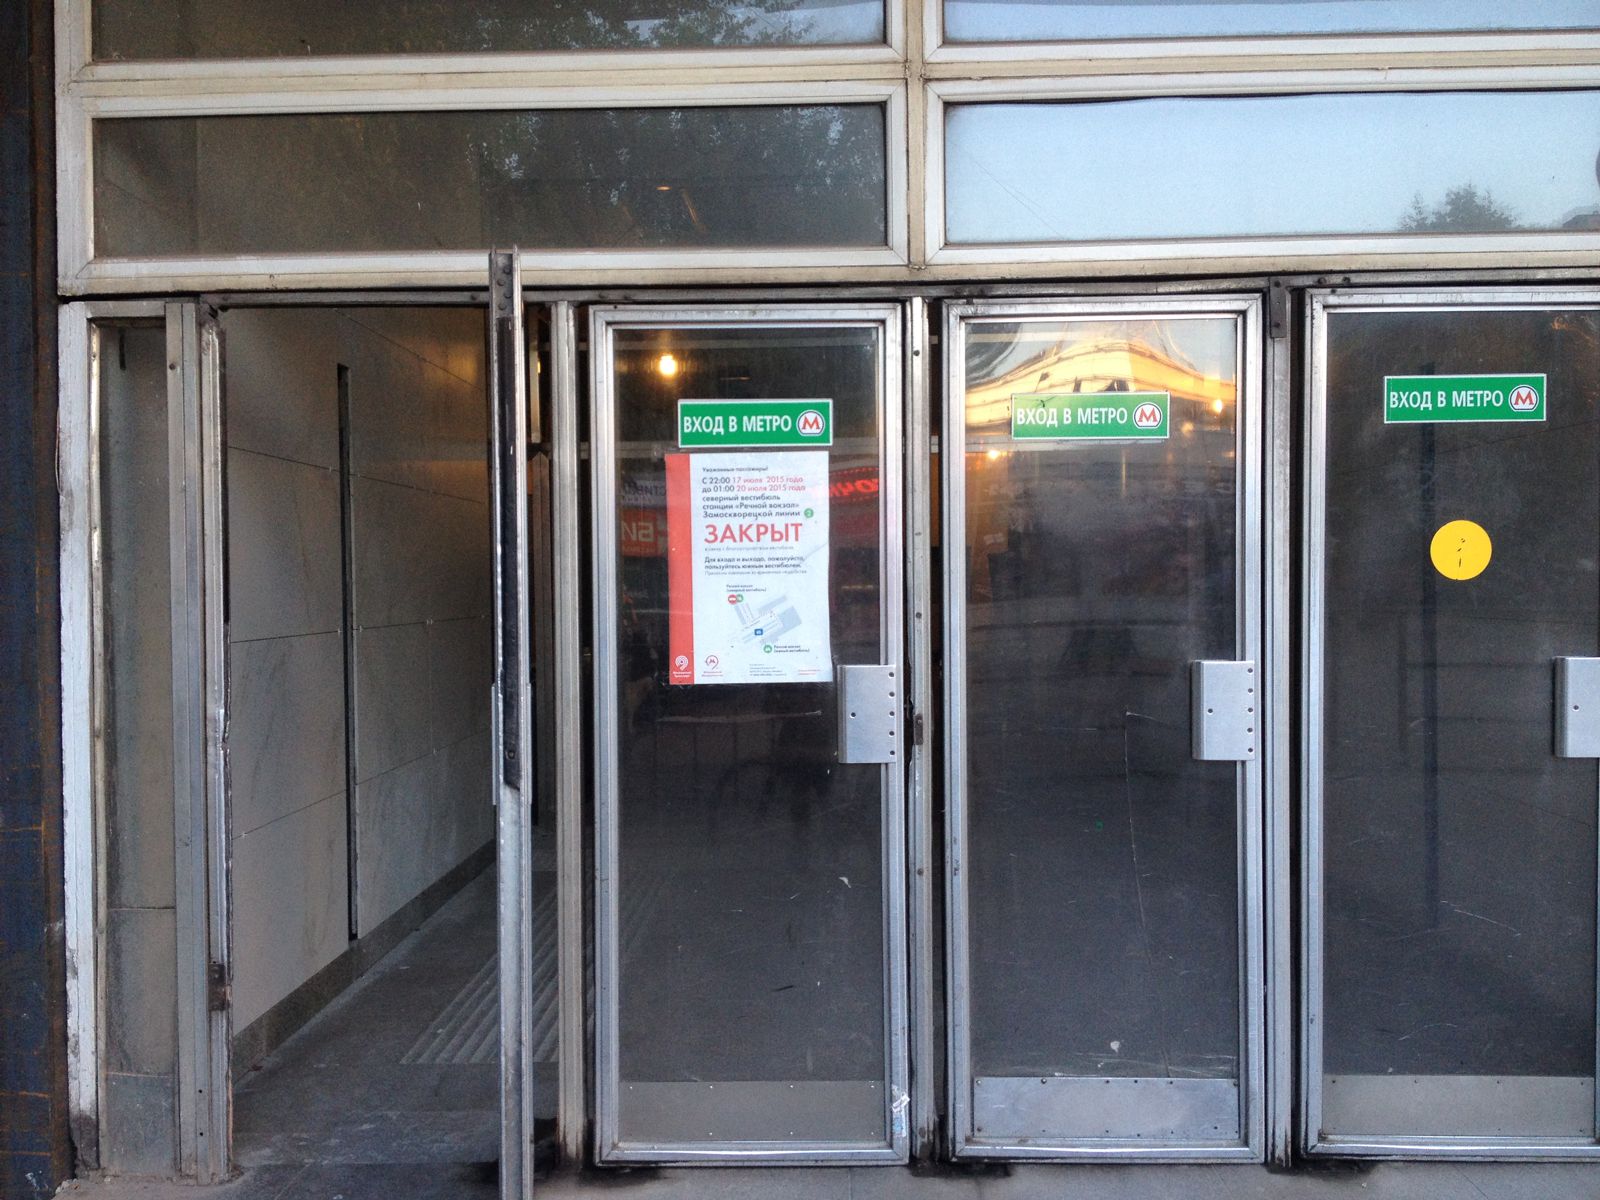 Двери метрополитена. Двери метро. Стеклянные двери в метро. Открытые двери в метро.